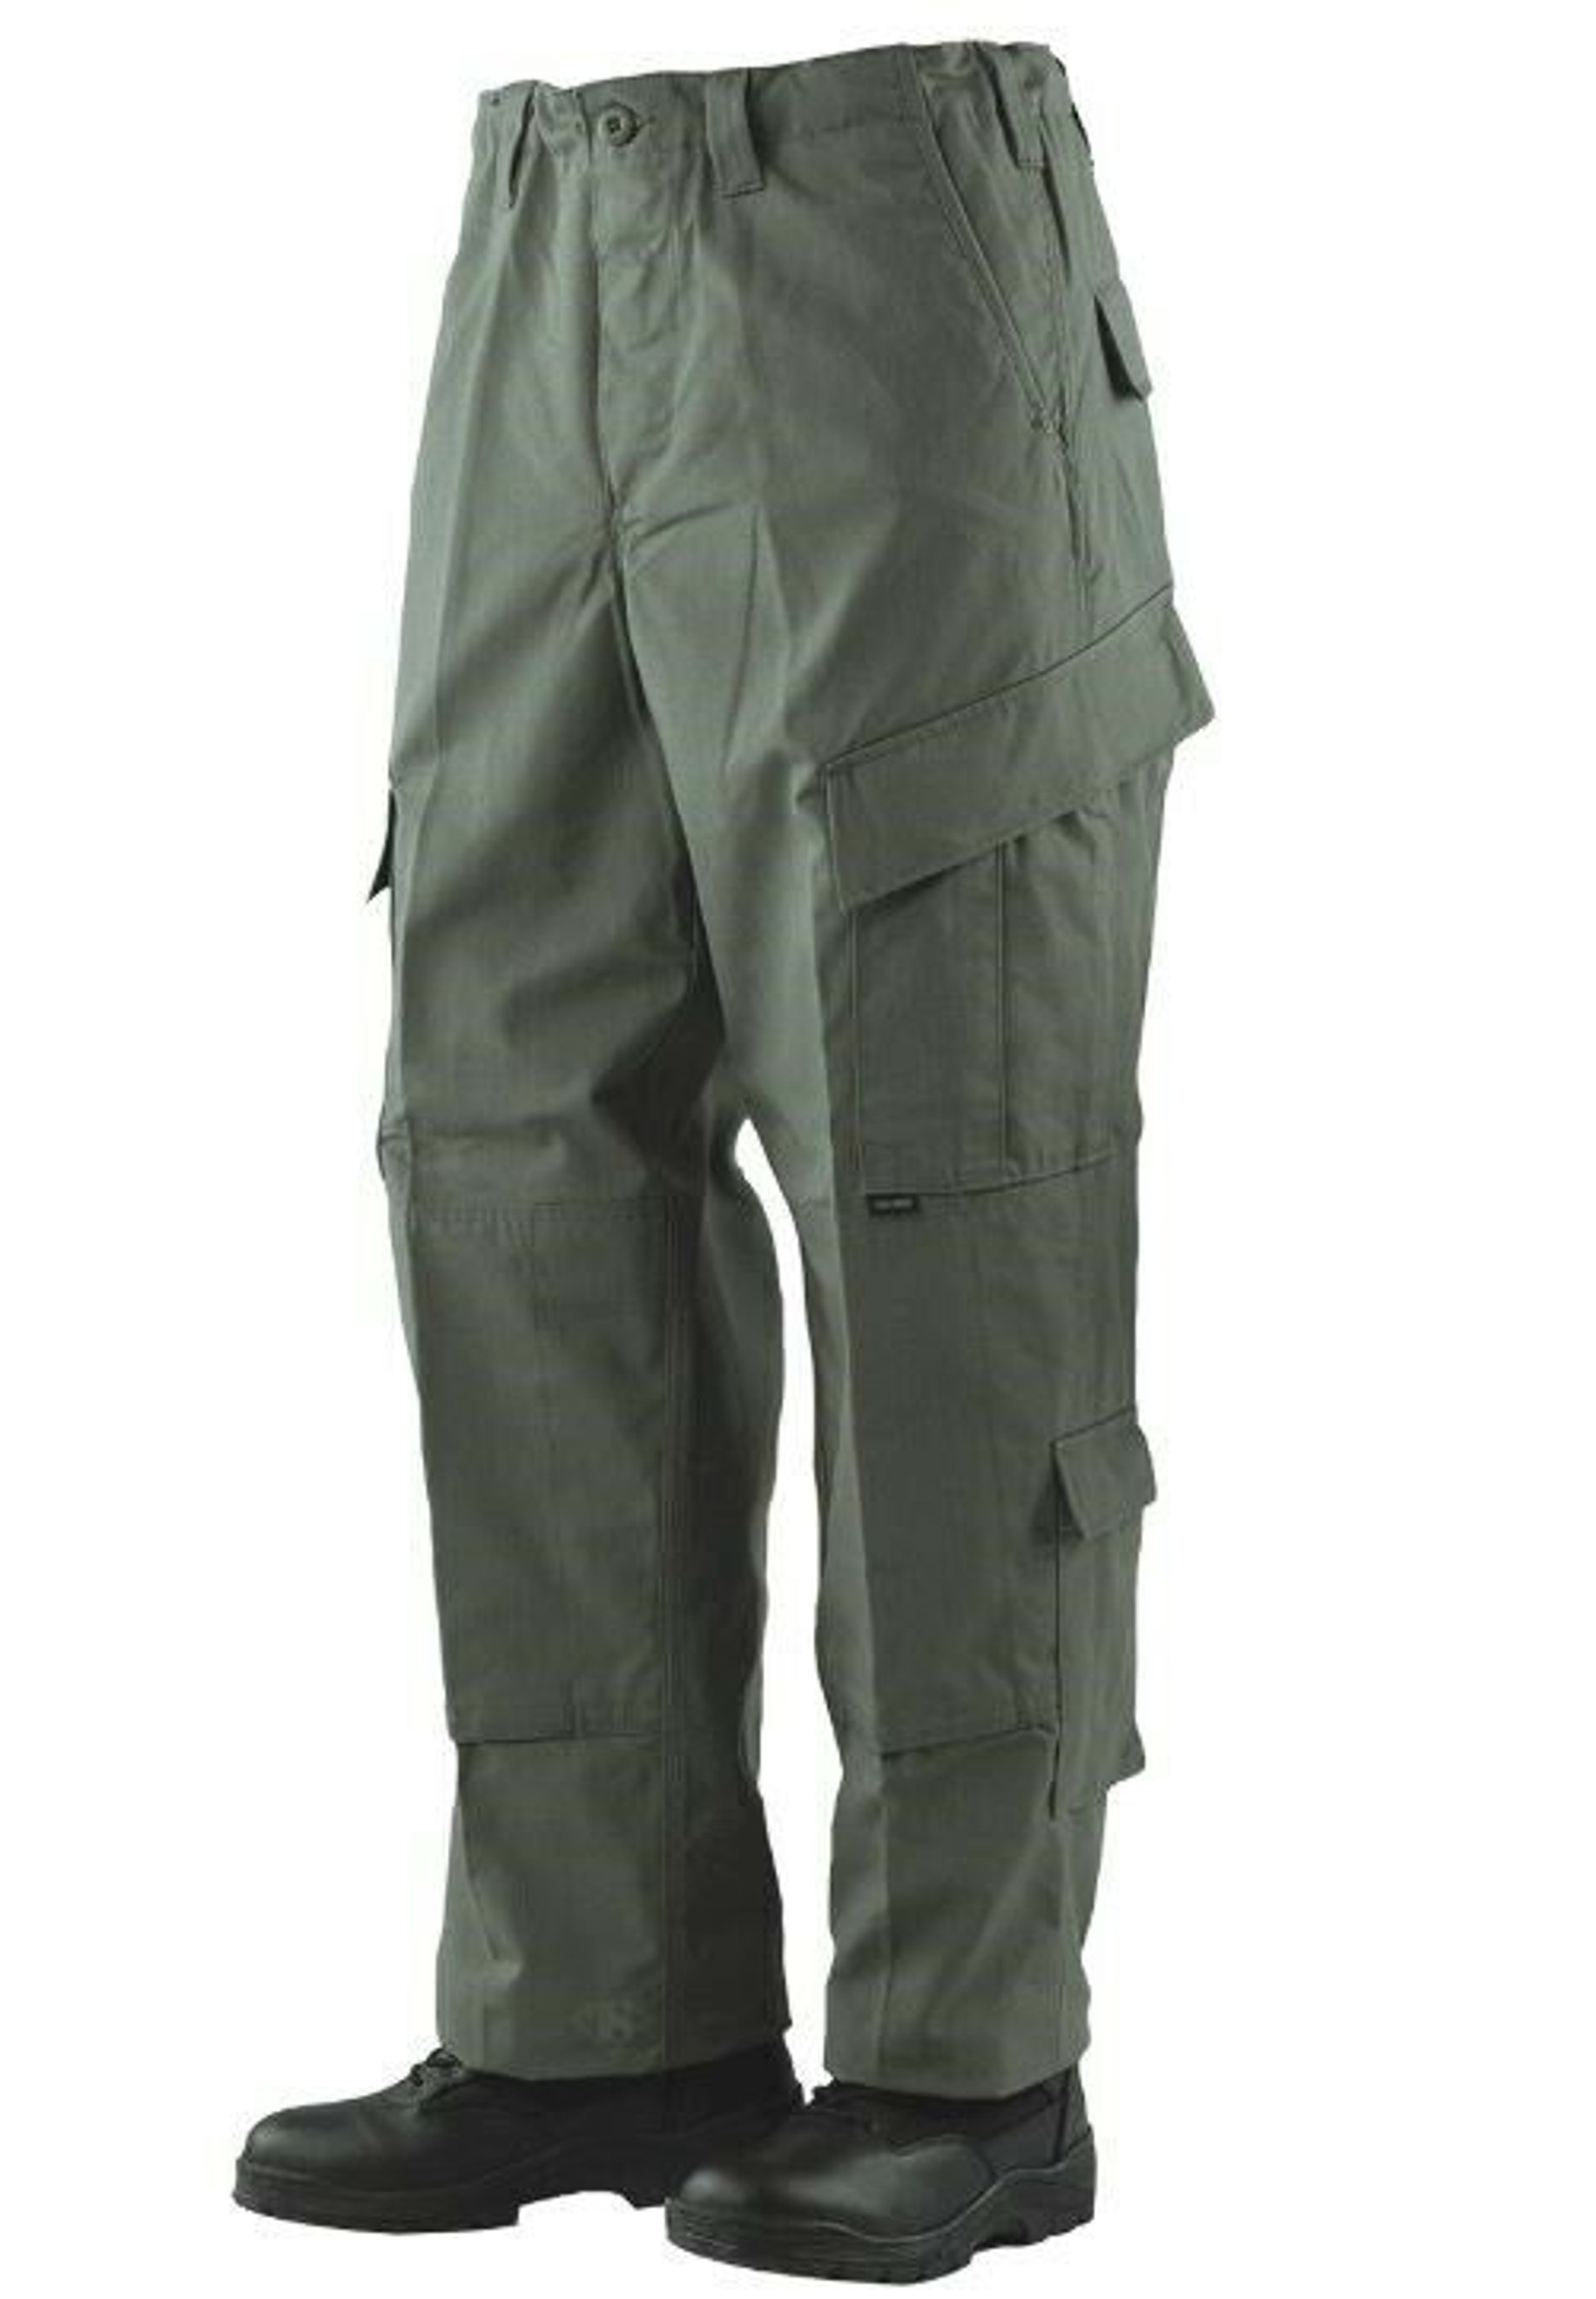 Range Tactical Pants - KRTSP-5554223043